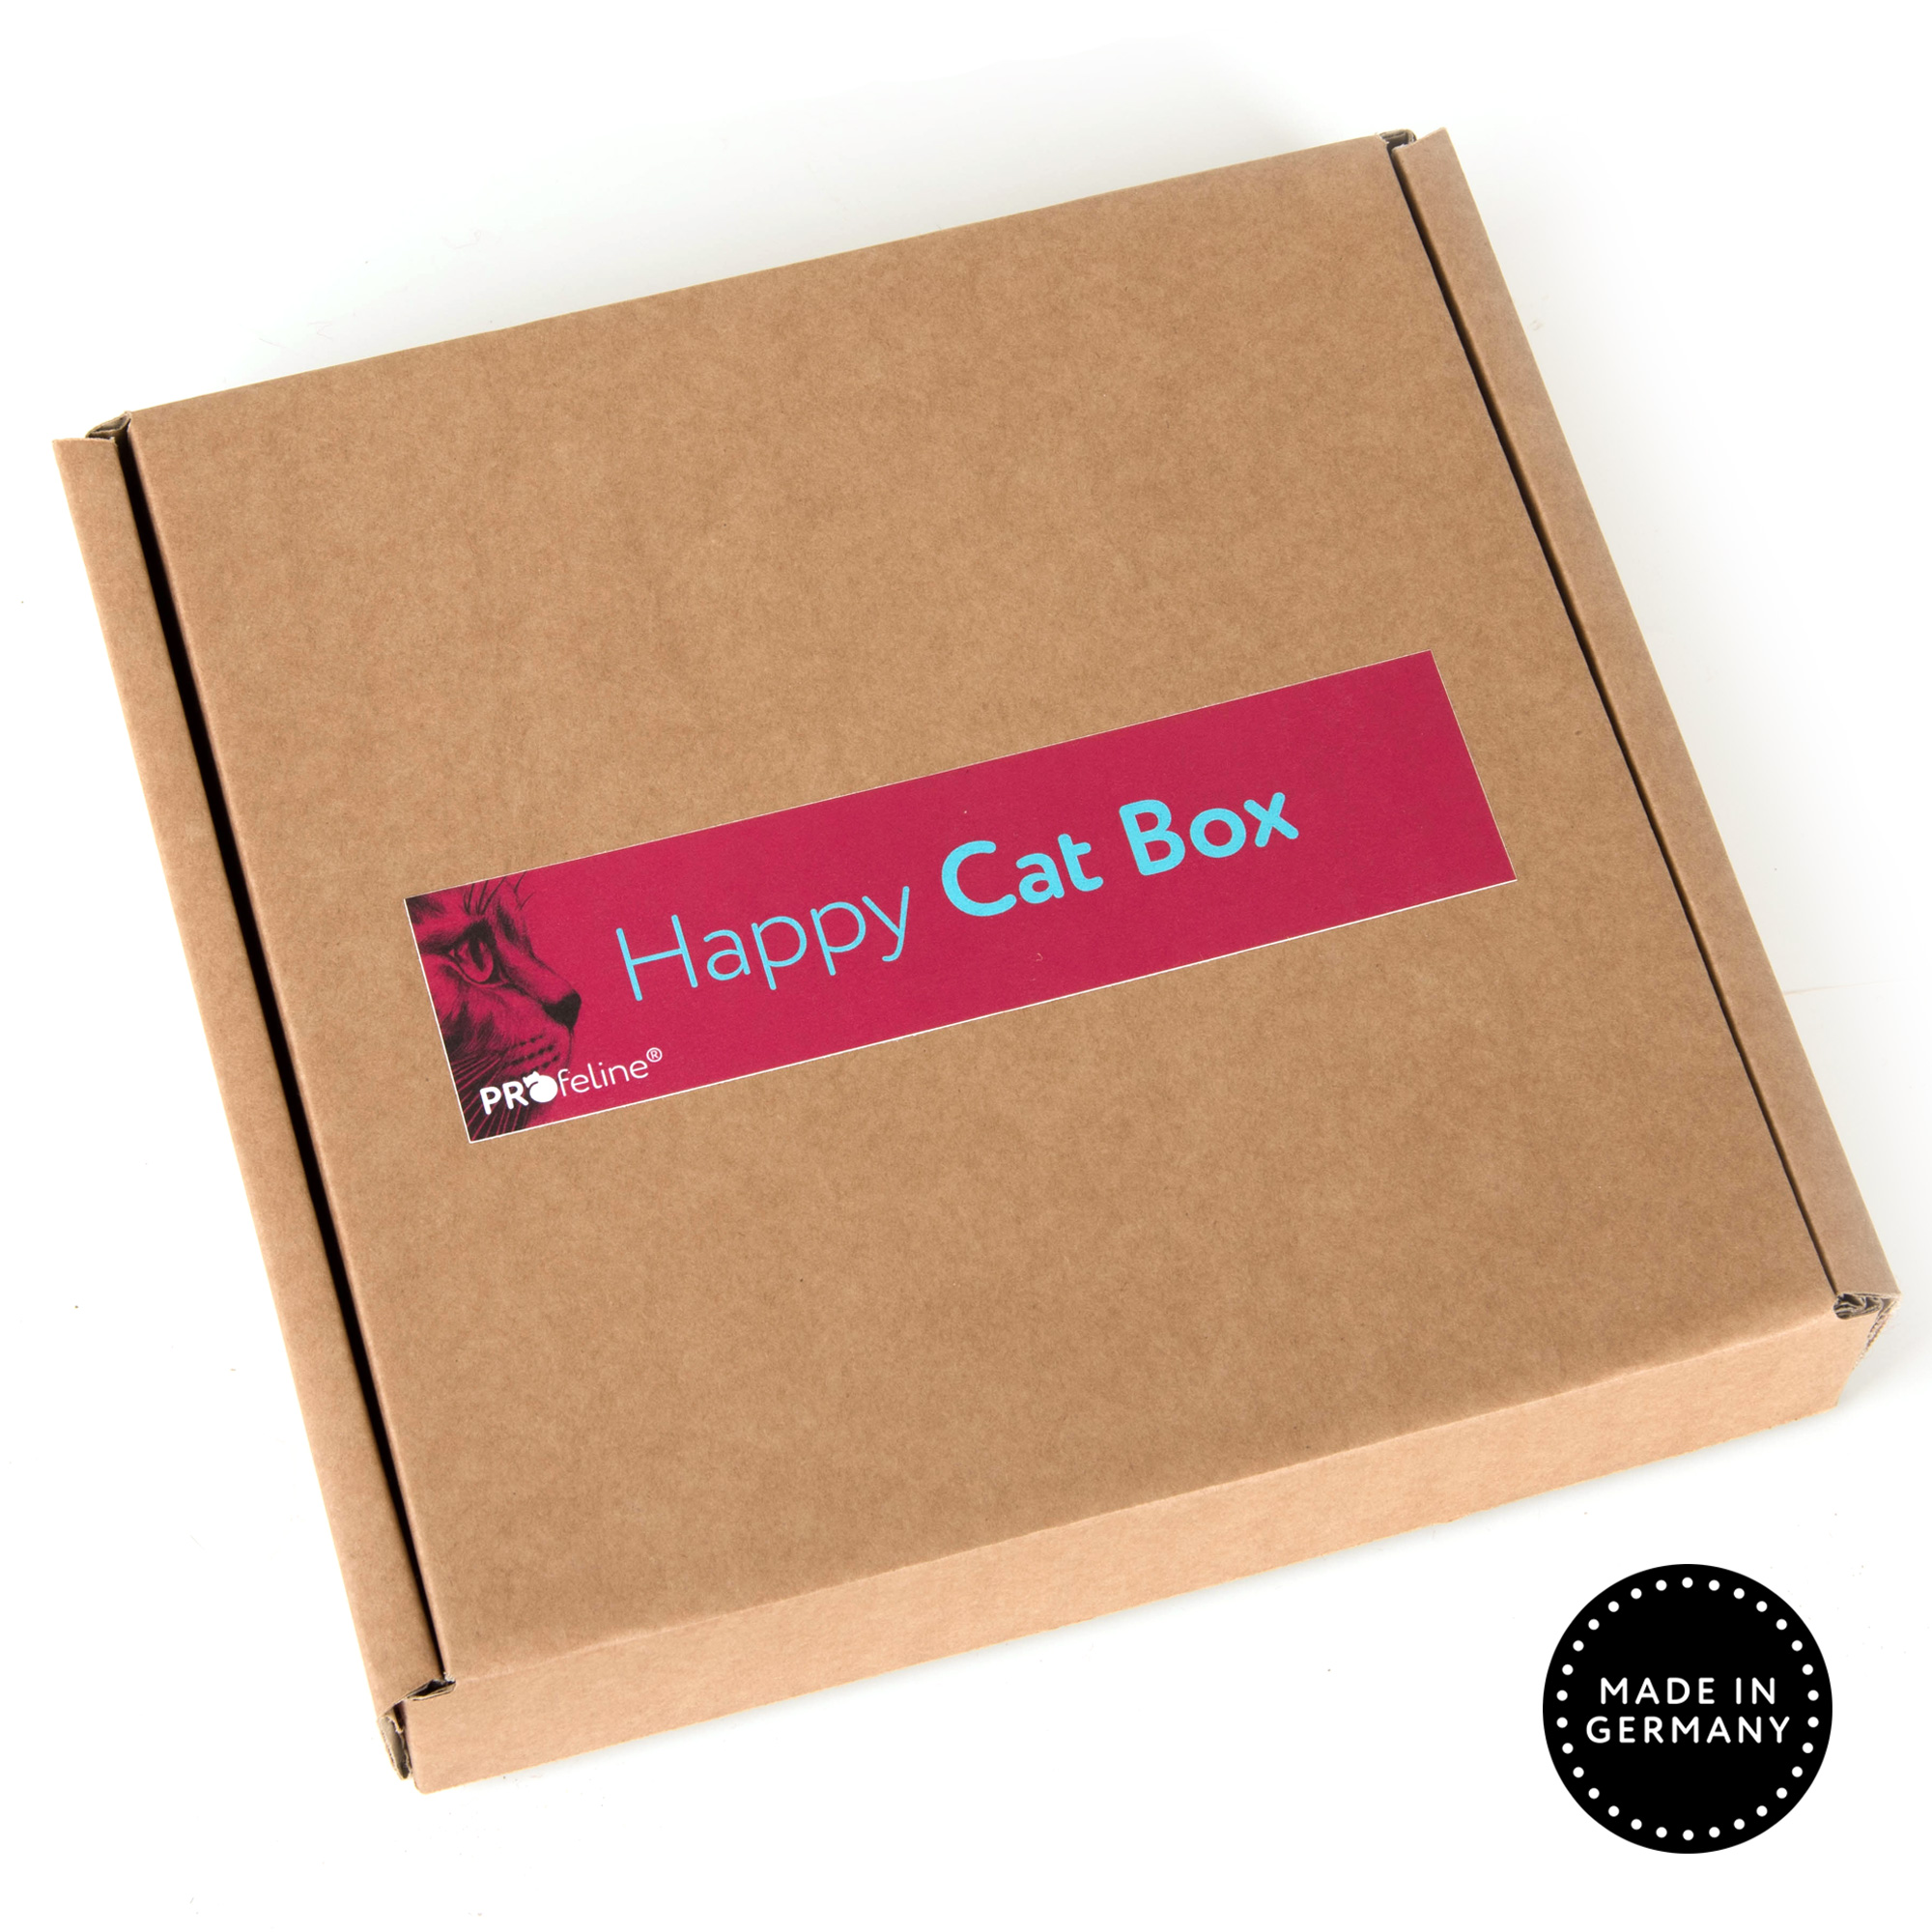 Happx Cat Box